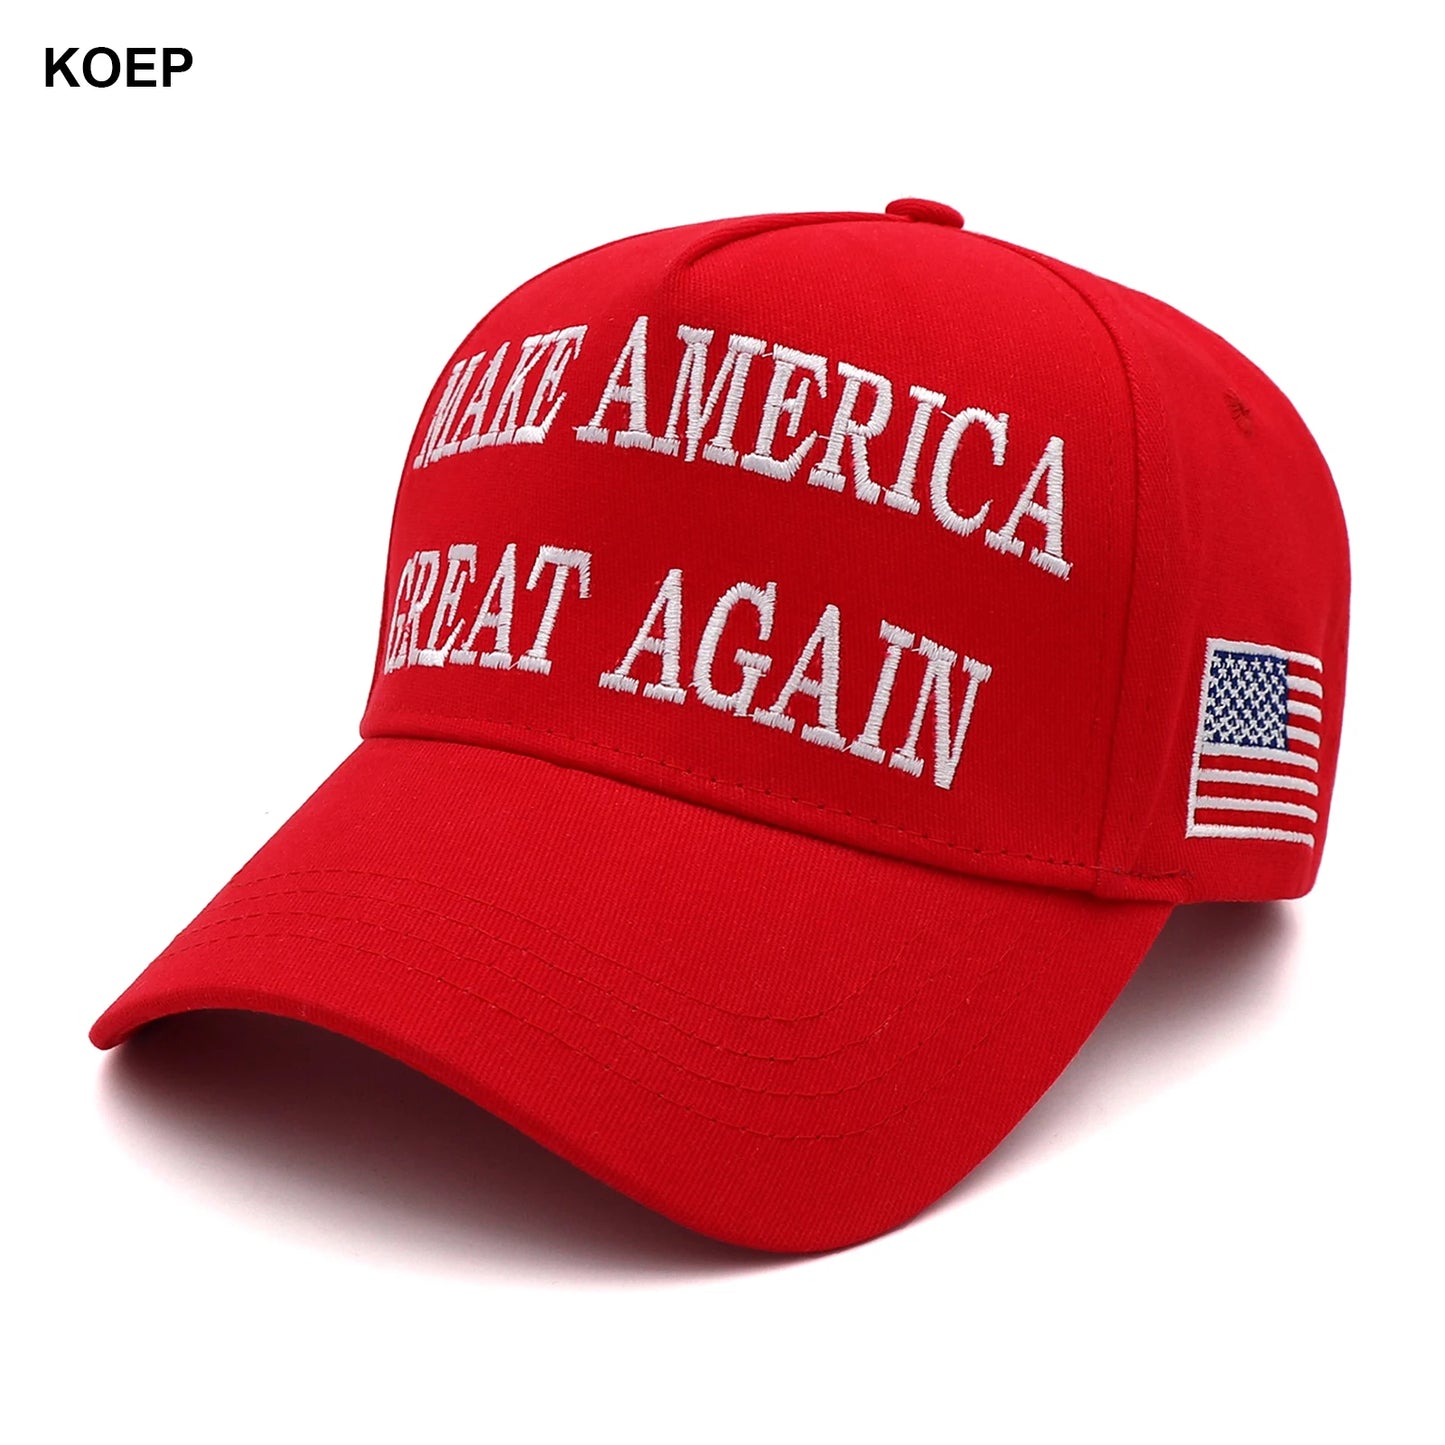 Pro-Trump - Donald Trump 2024 Embroidered Hats - Make America Great Again